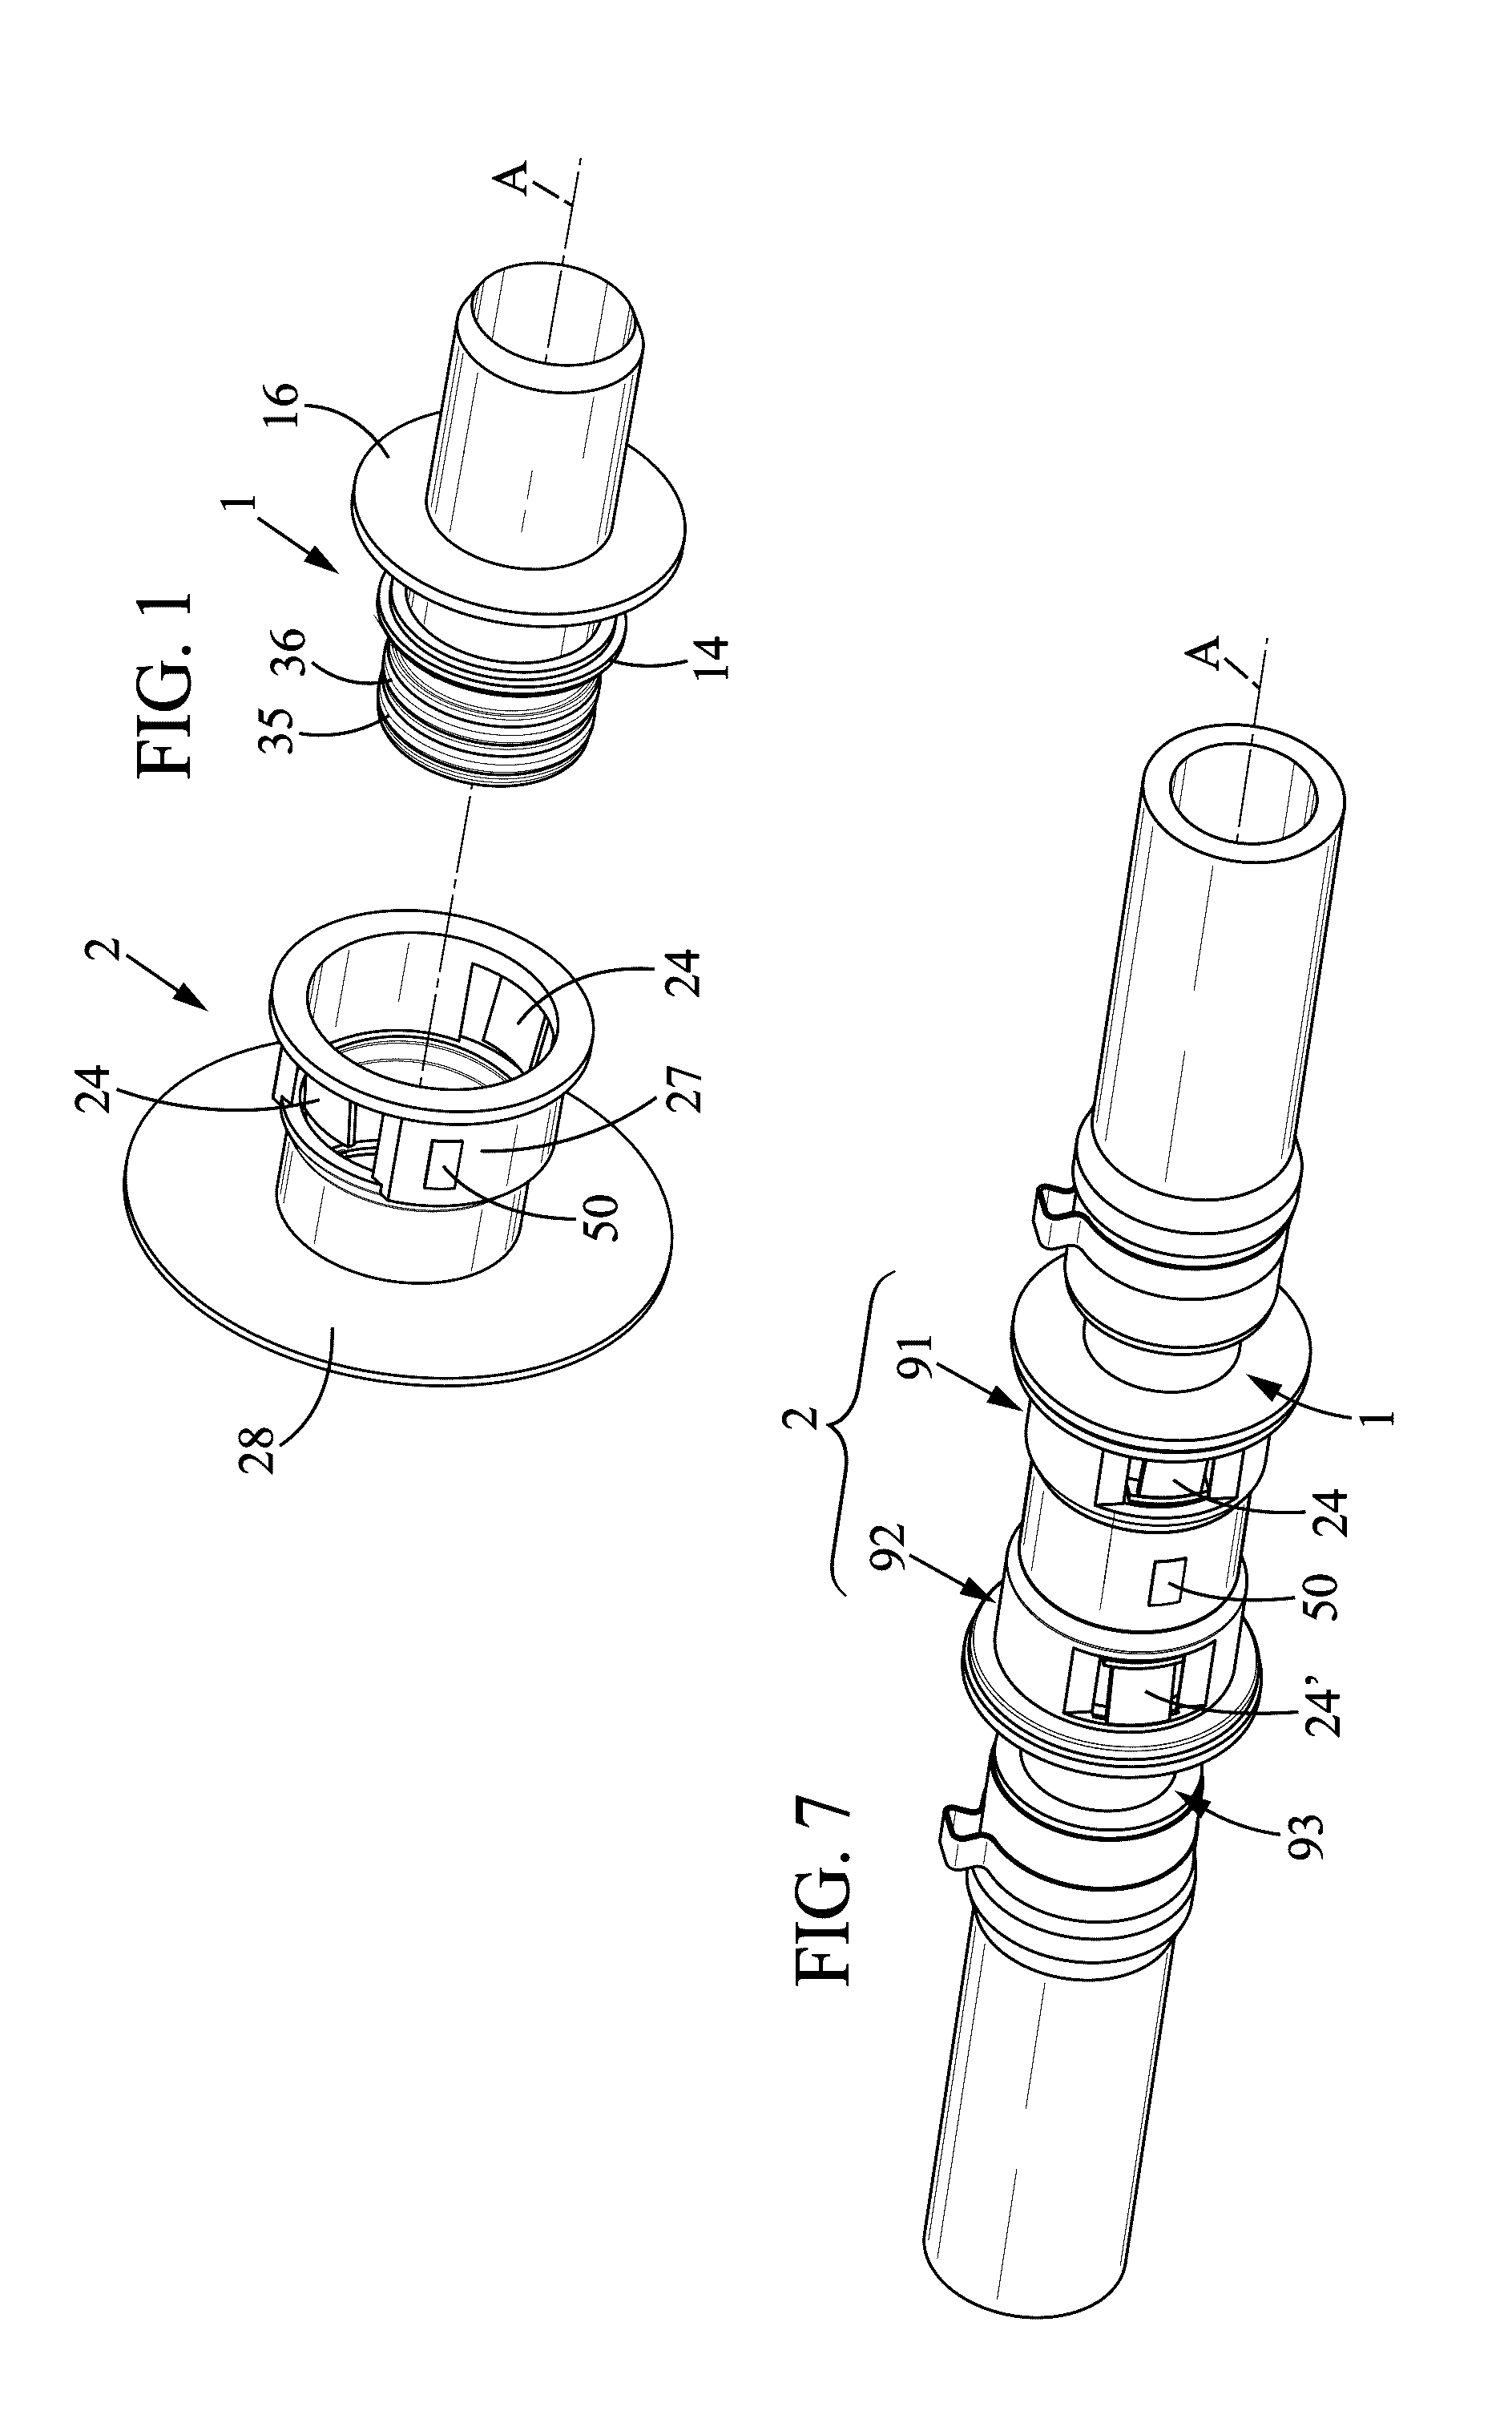 Locking fluid connector